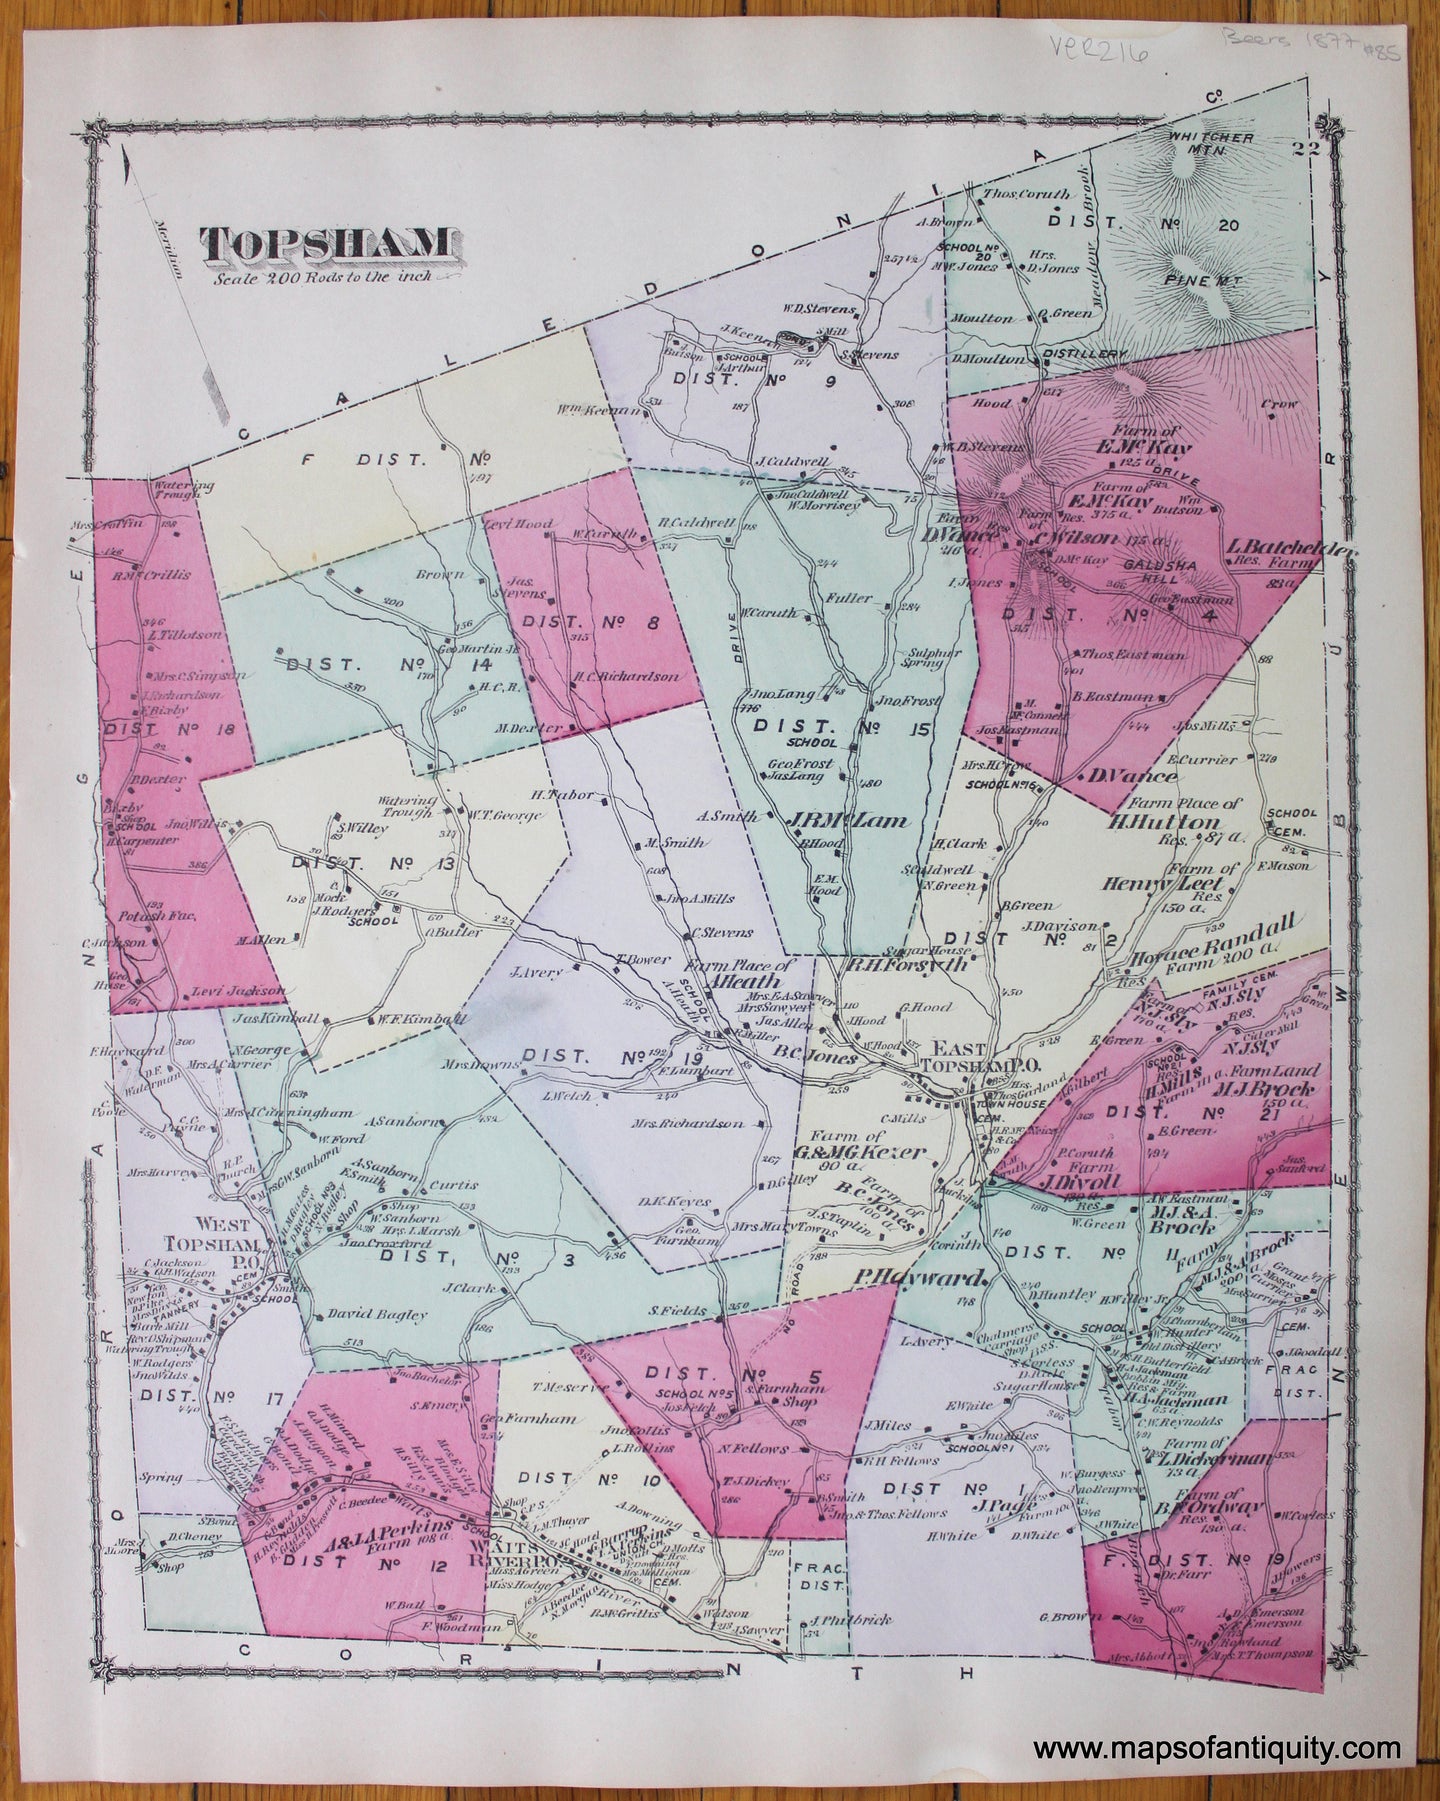 Topsham-1877-Beers-Antique-Map-Vermont-Orange-County-1870s-1800s-19th-century-Maps-of-Antiquity